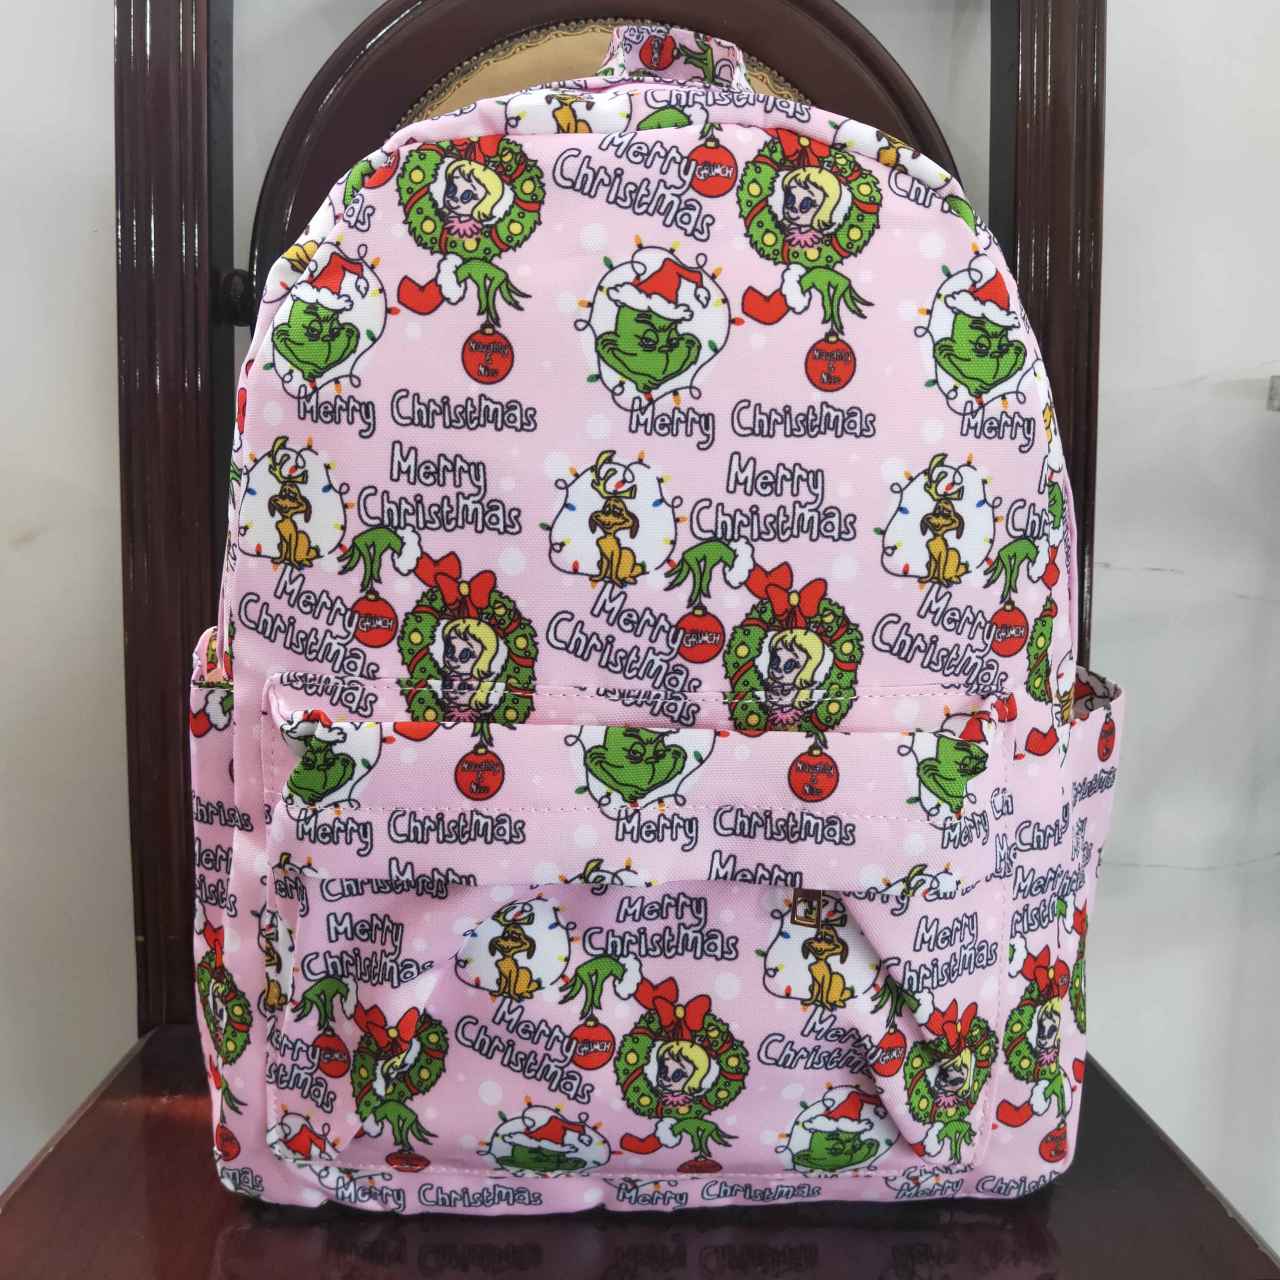 BA0148   merry christmas pink backpack